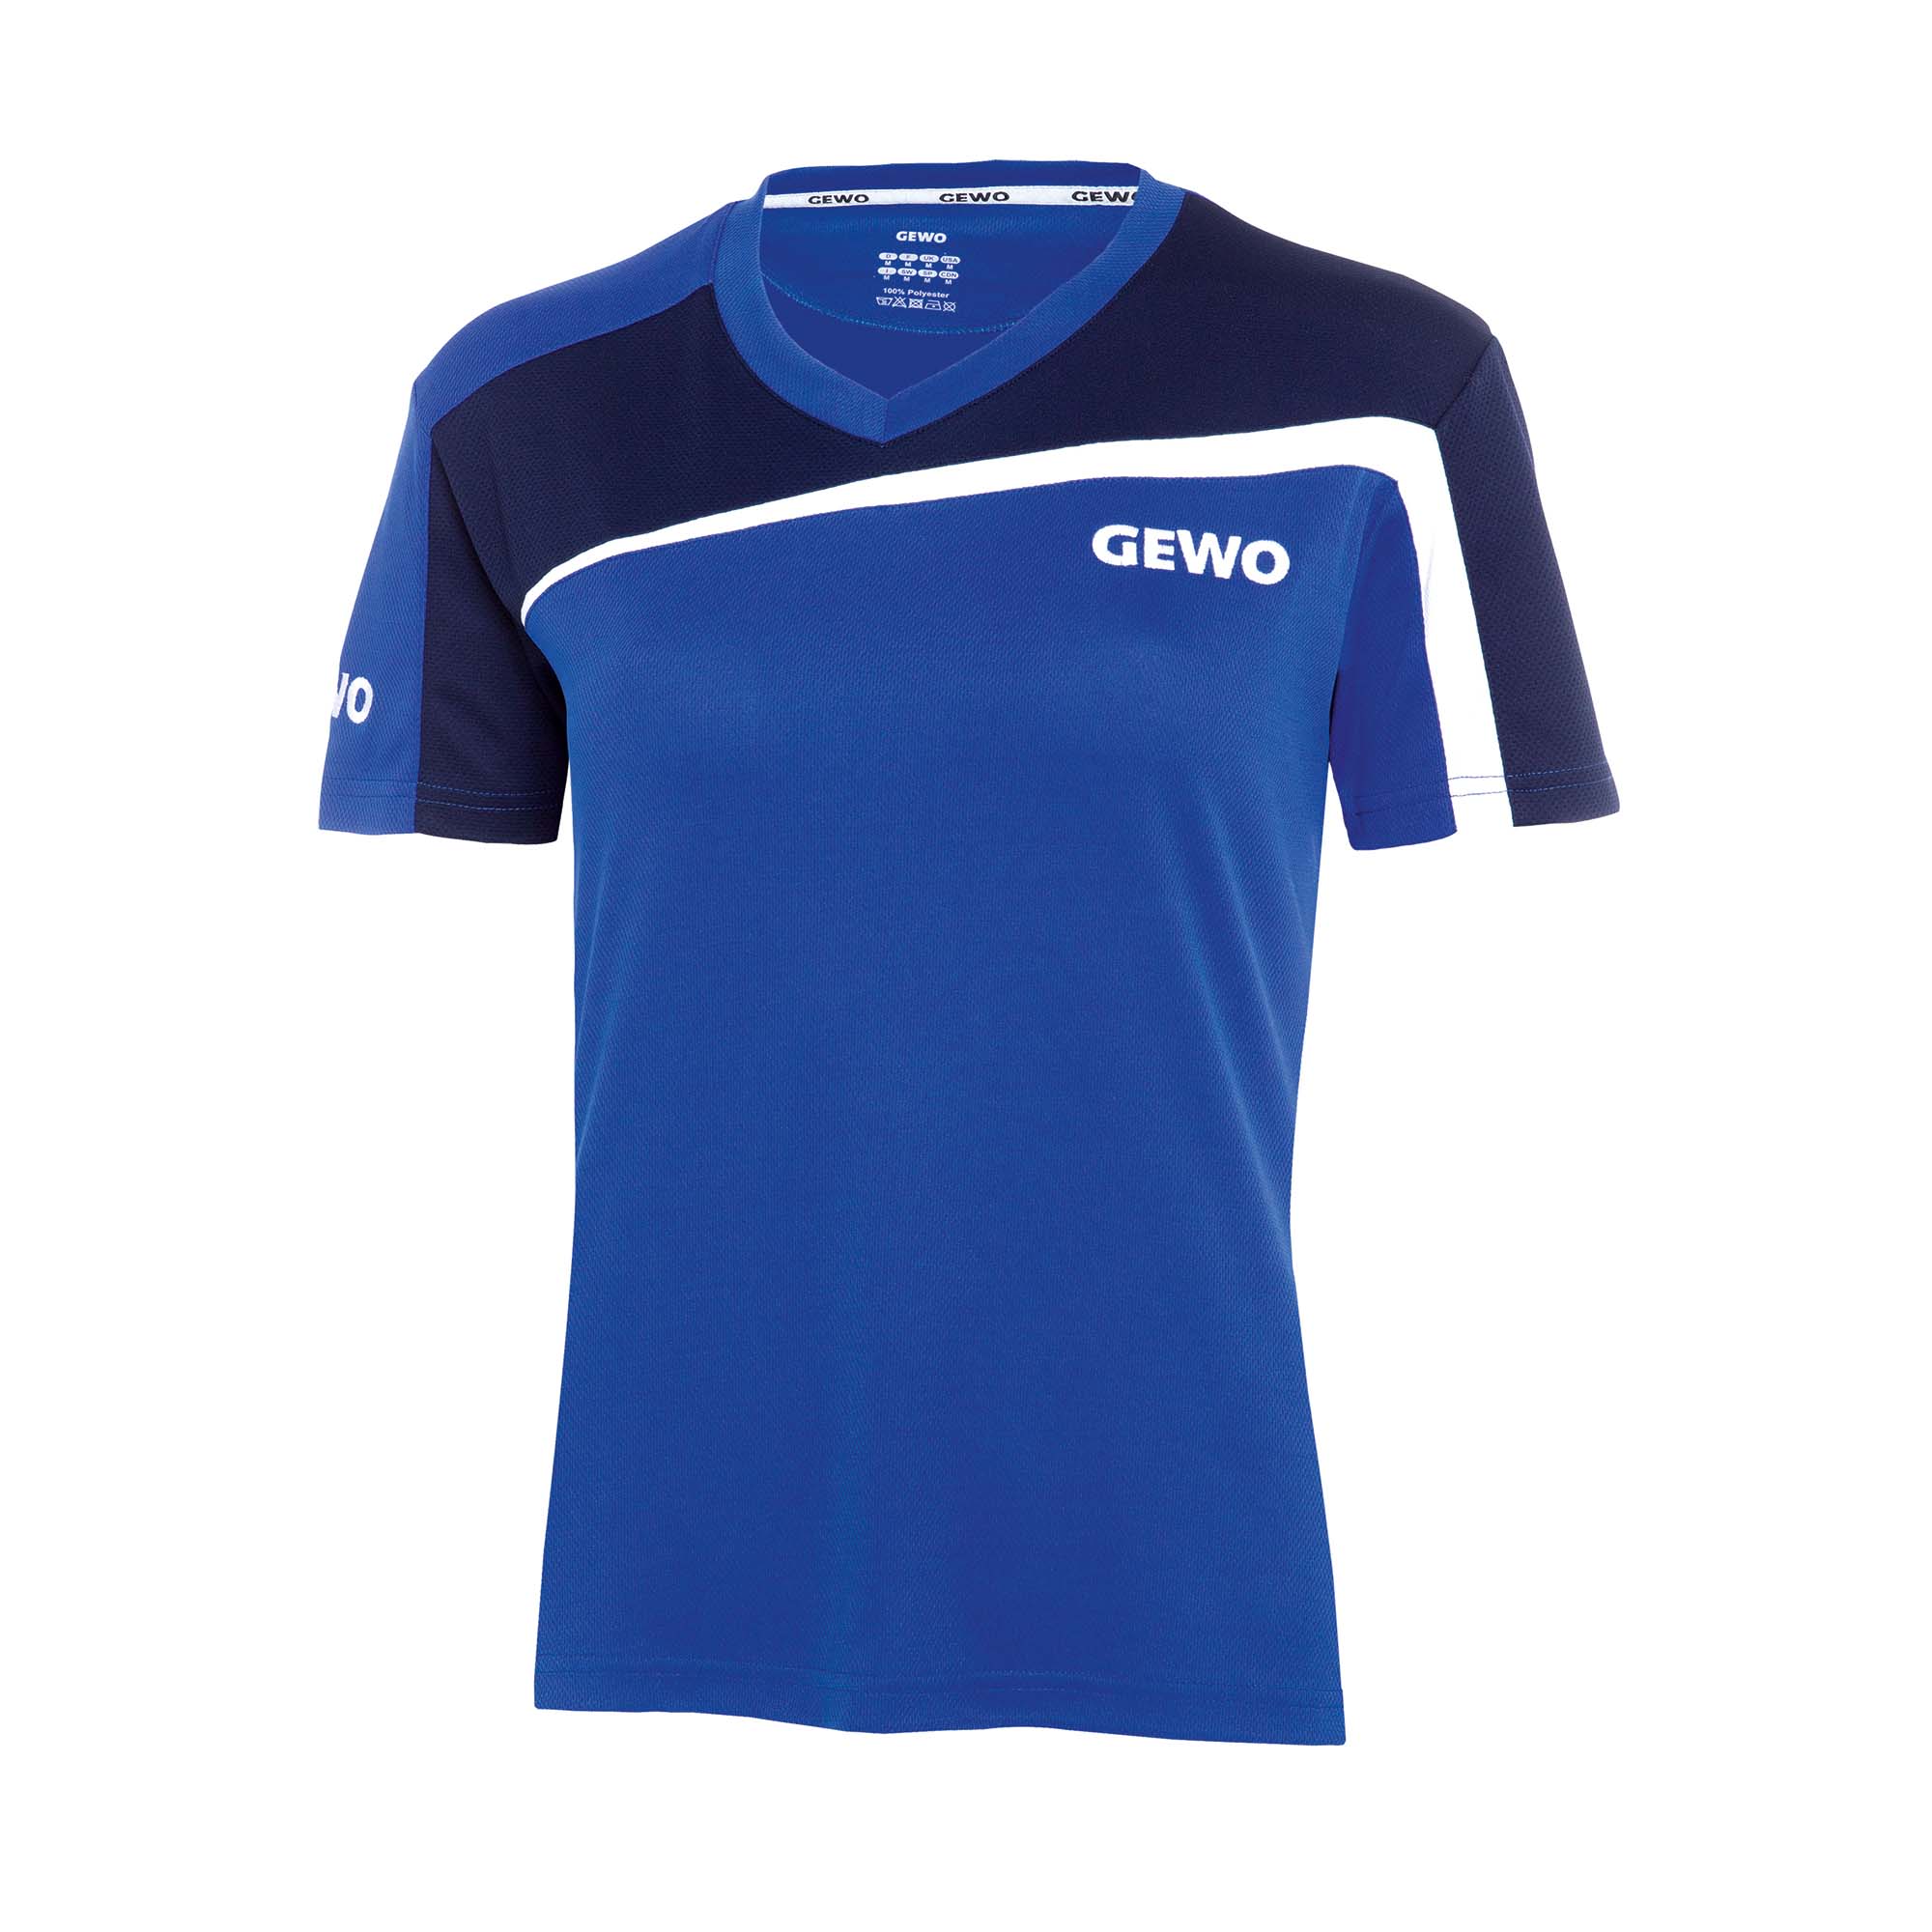 GEWO Lady Shirt Teramo S18-3  blau/navy XL